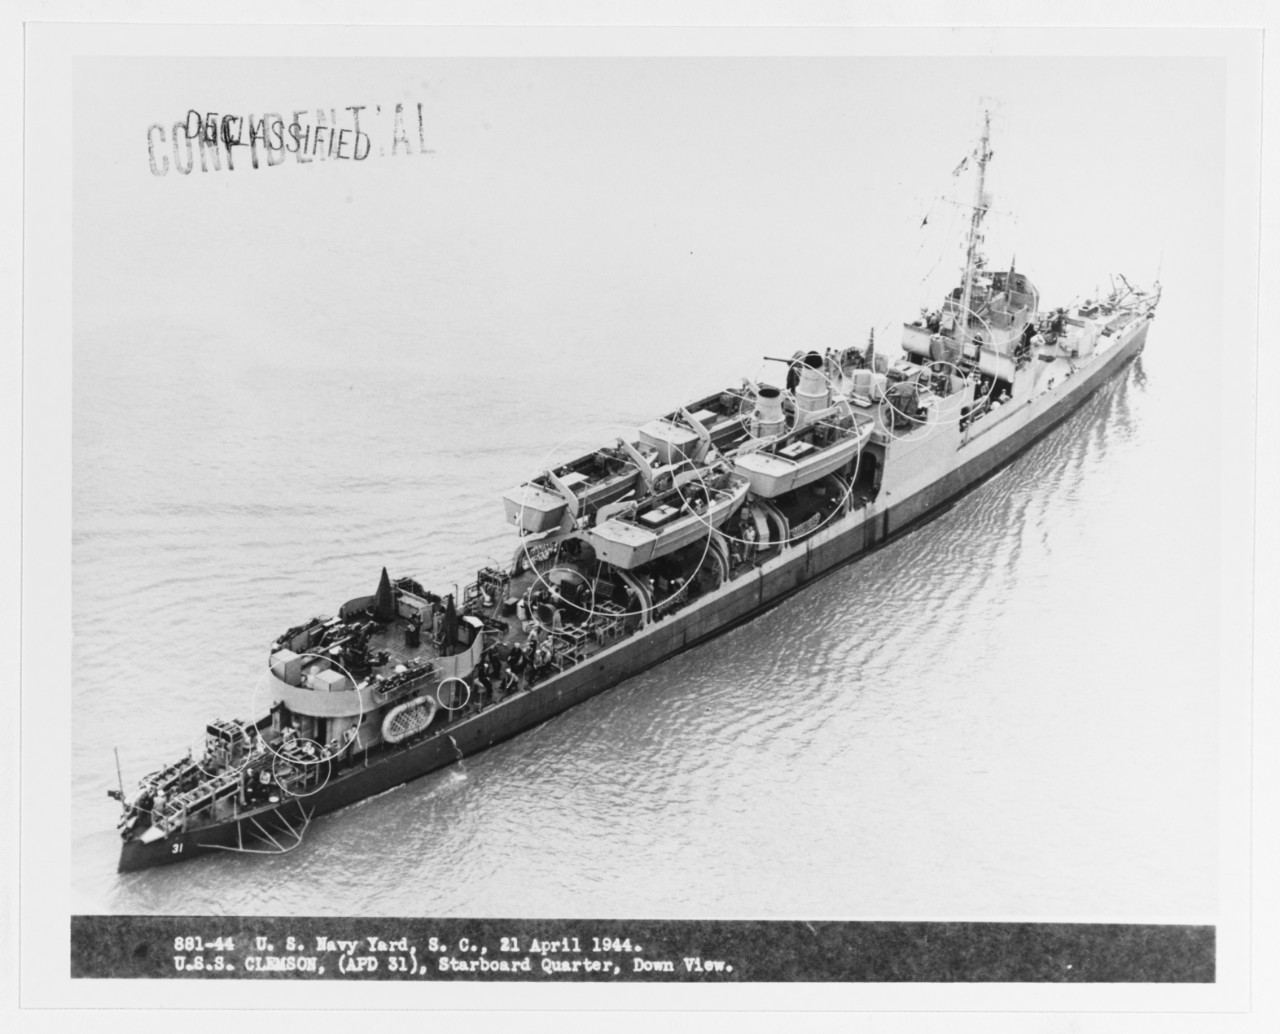 USS CLEMSON (APD-31)